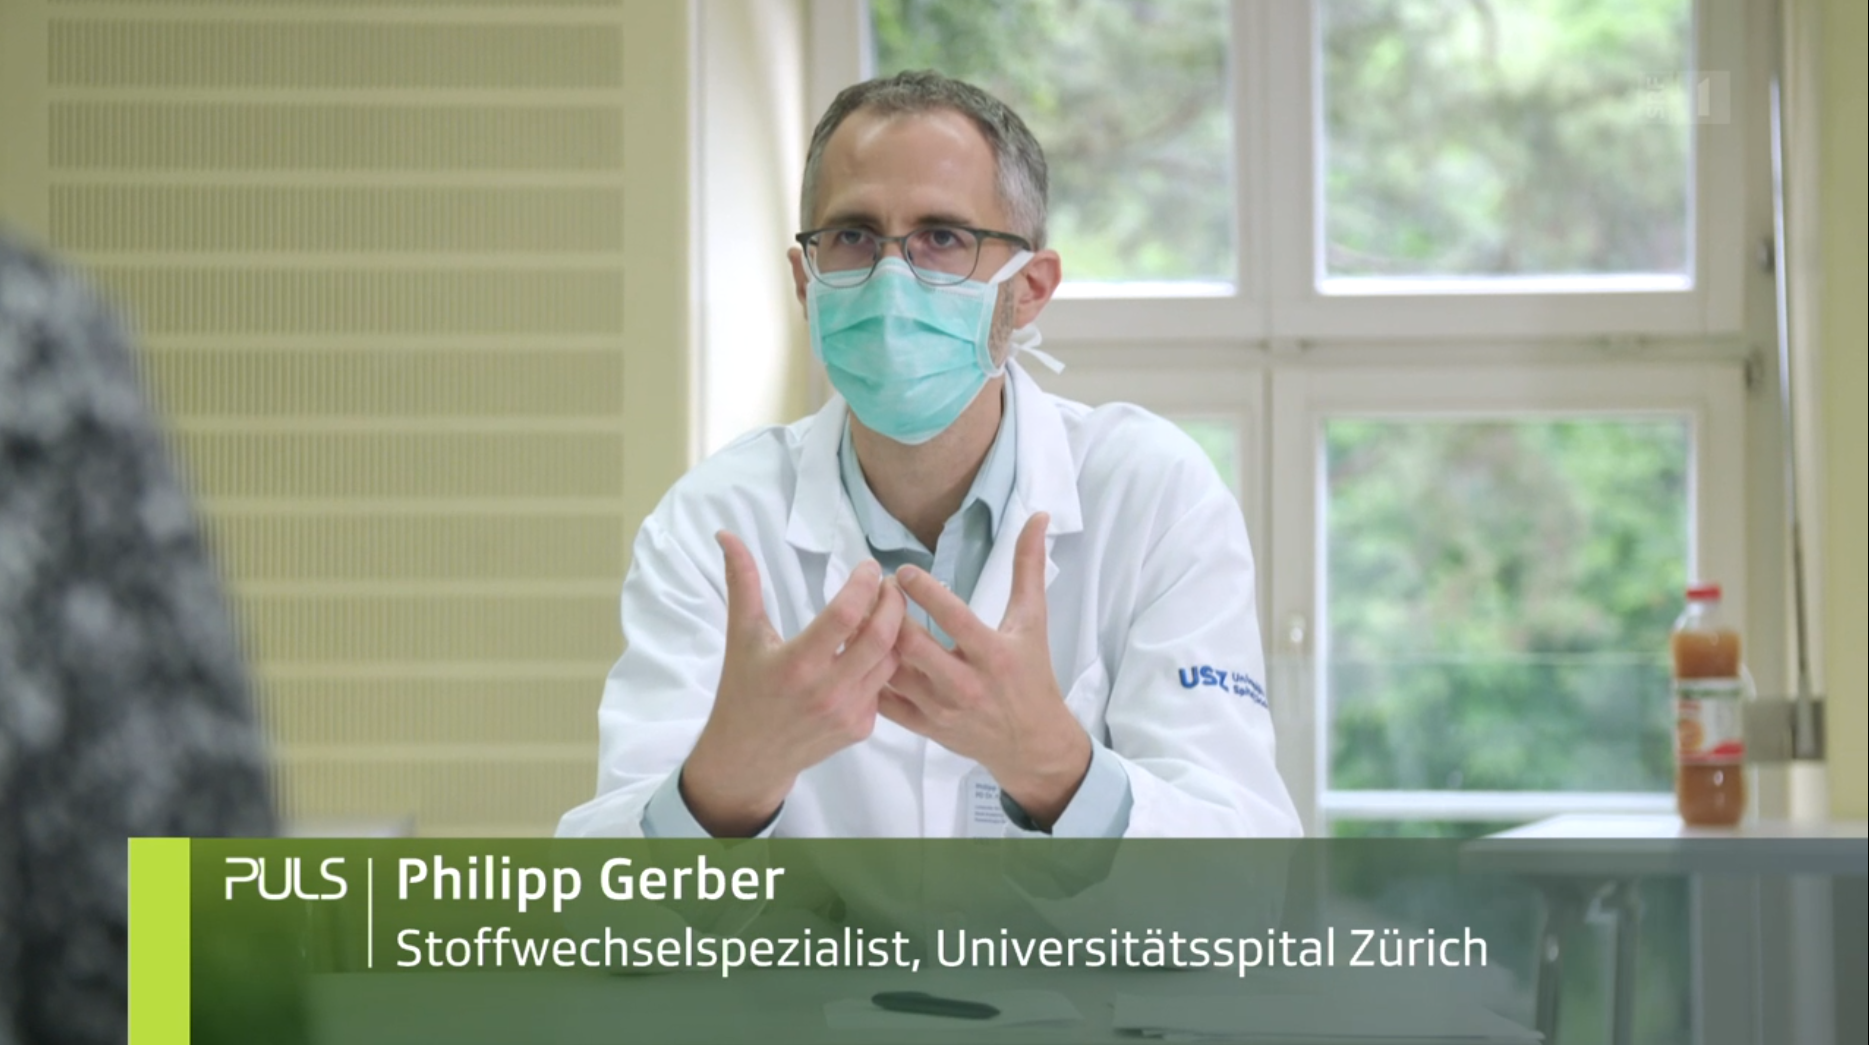 Video Platzhalter - SRF Puls zum Thema Diabetes mit Philipp Gerber